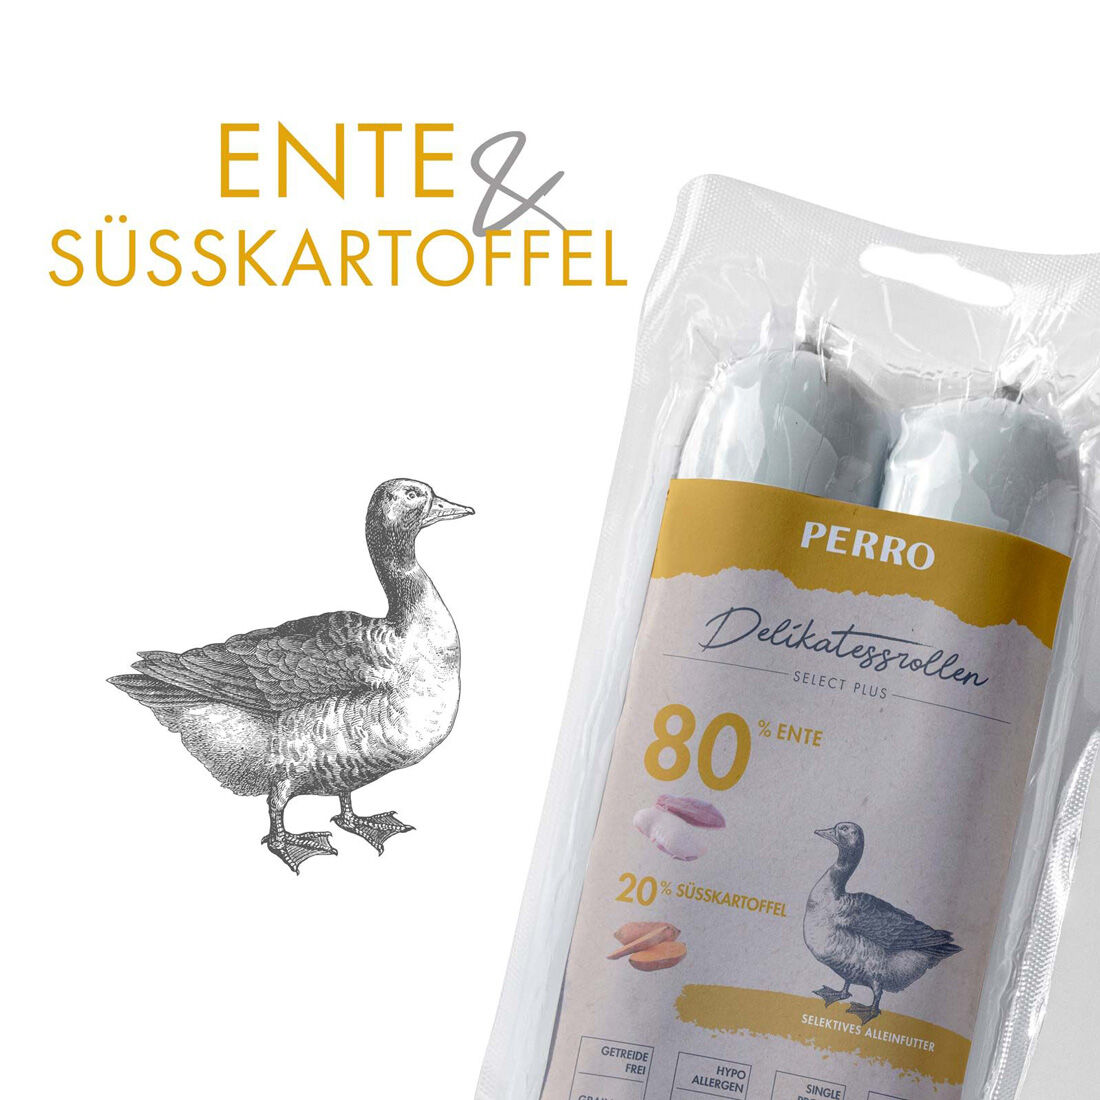 PERRO-Delikatessrolle-Ente-Suesskartoffel-Hundewurst-Trainingswurst-181588